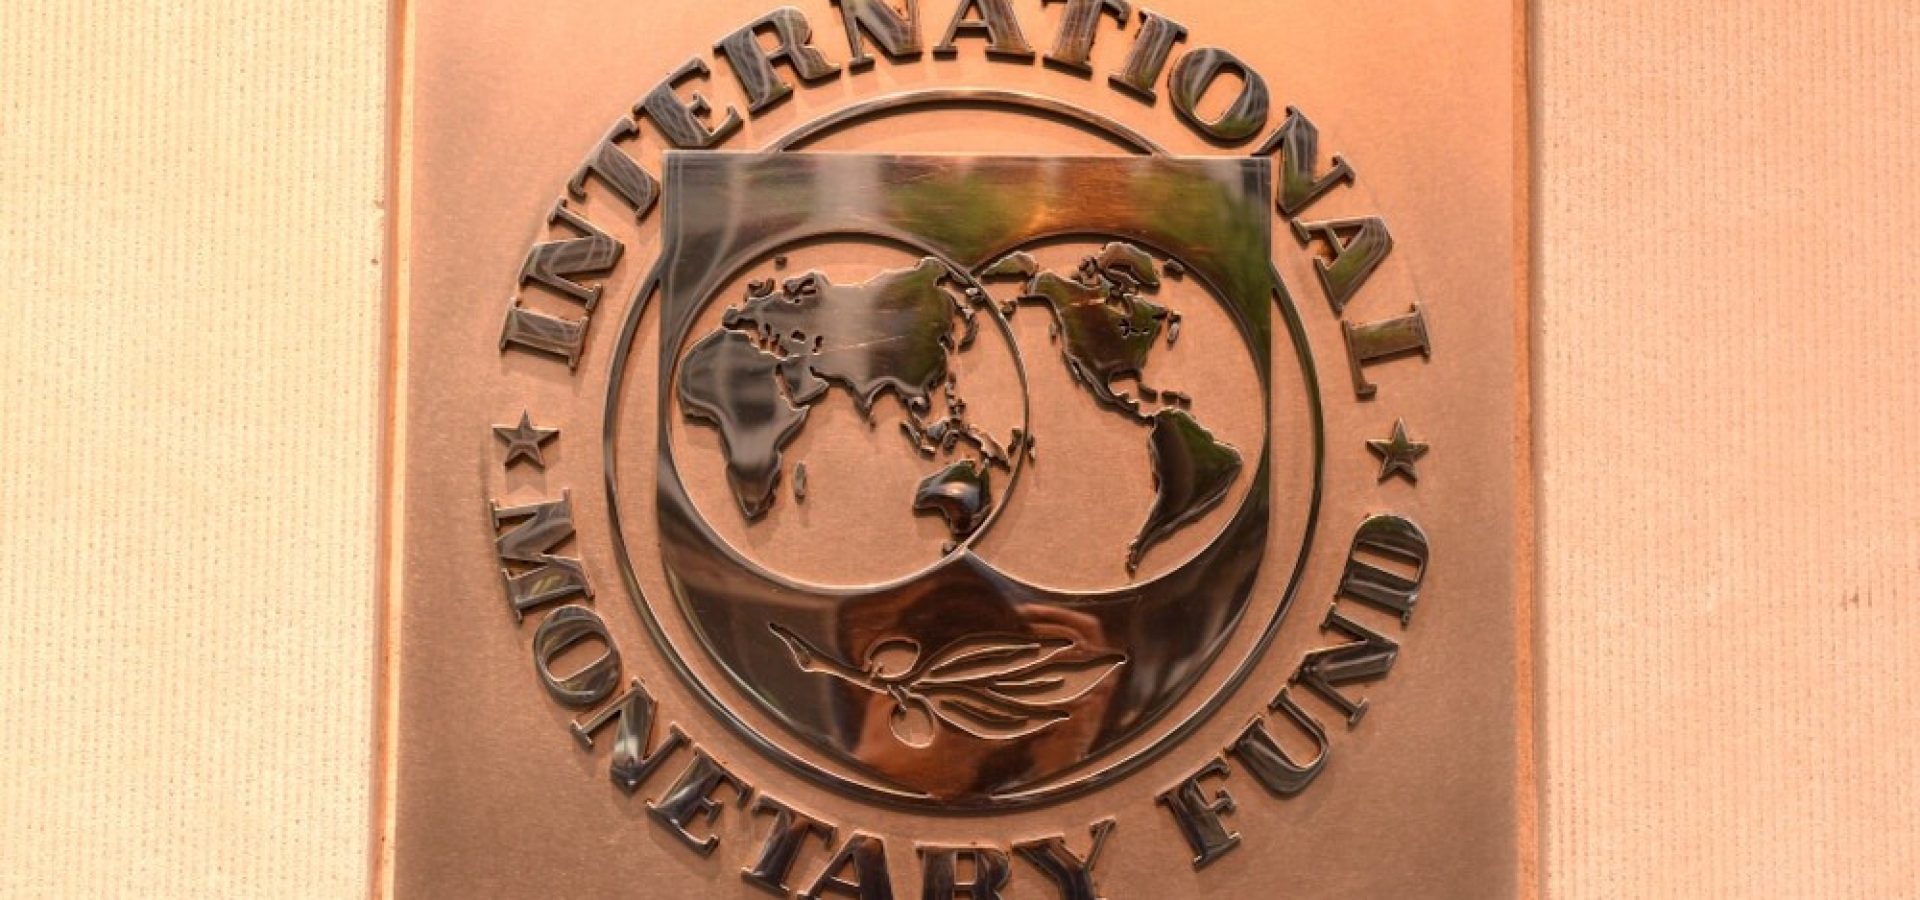 Wibest – IMF: Emblem of the International Monetary Fund in their headquarters in Washington.